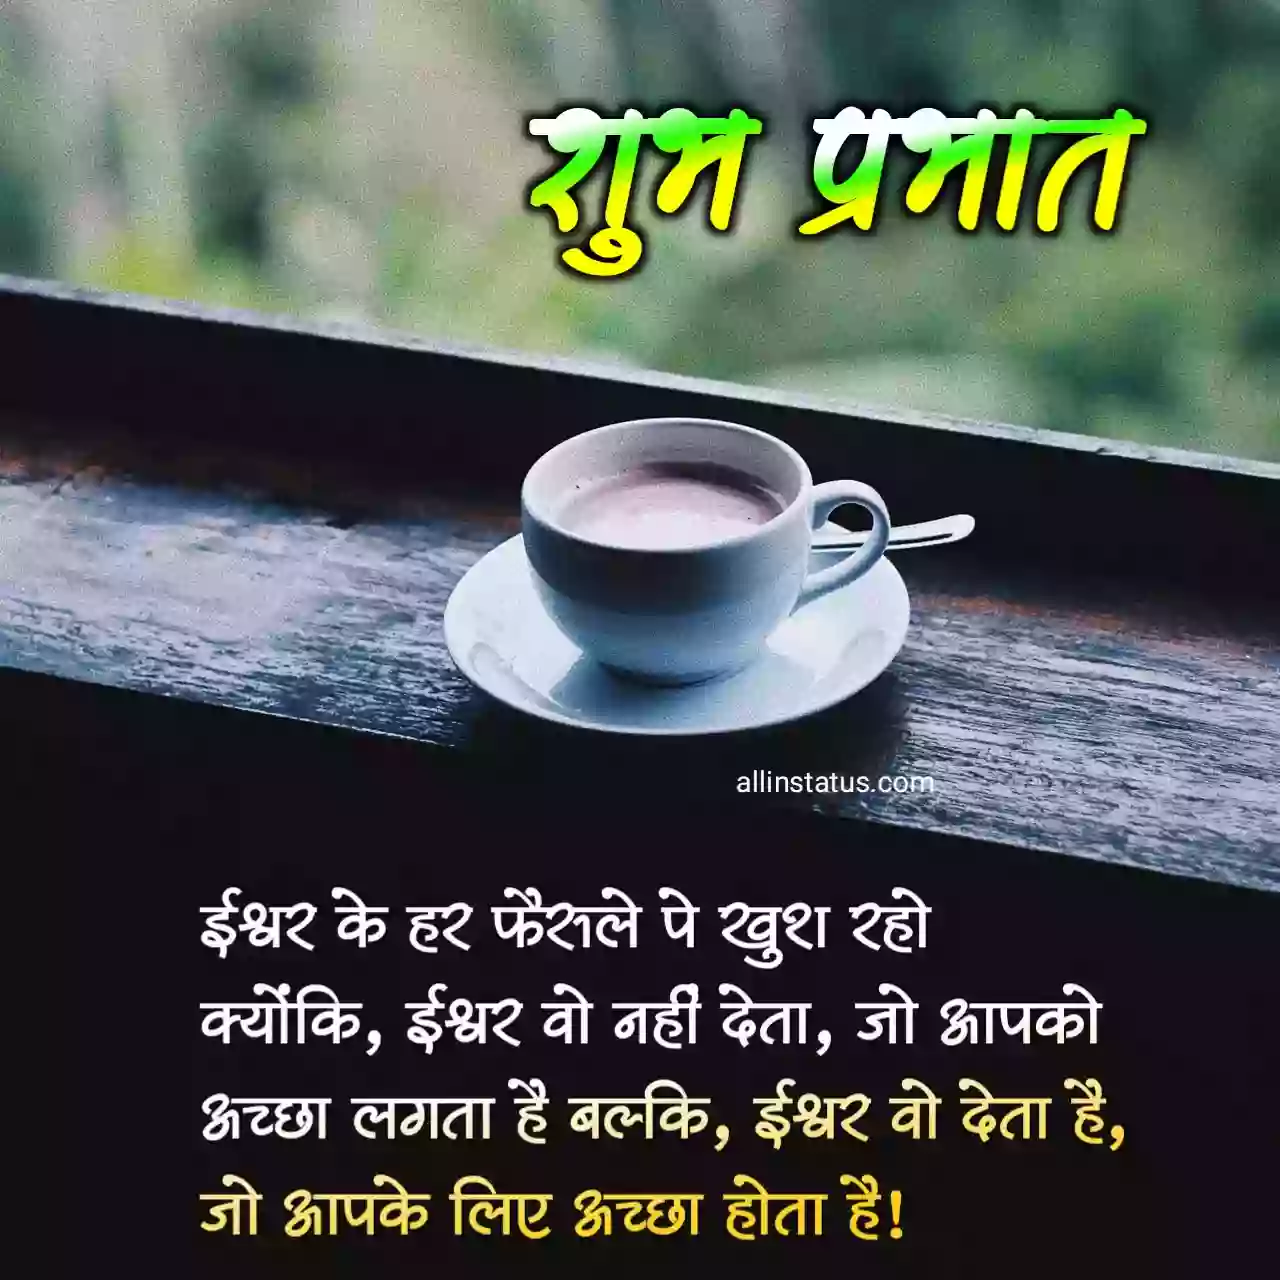 Good morning status in hindi